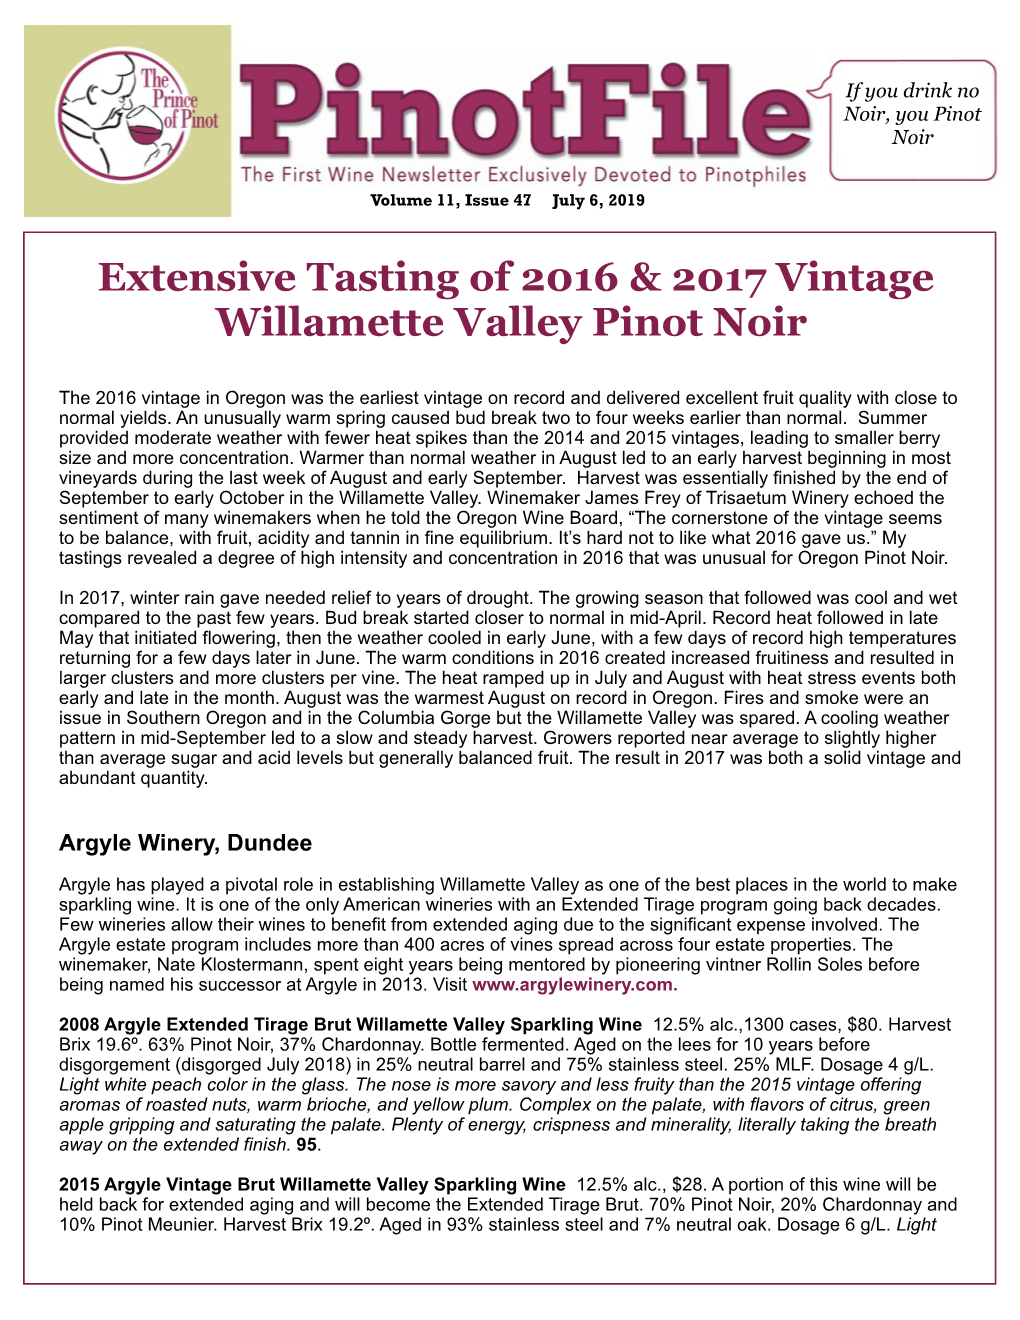 Extensive Tasting of 2016 & 2017 Vintage Willamette Valley Pinot Noir